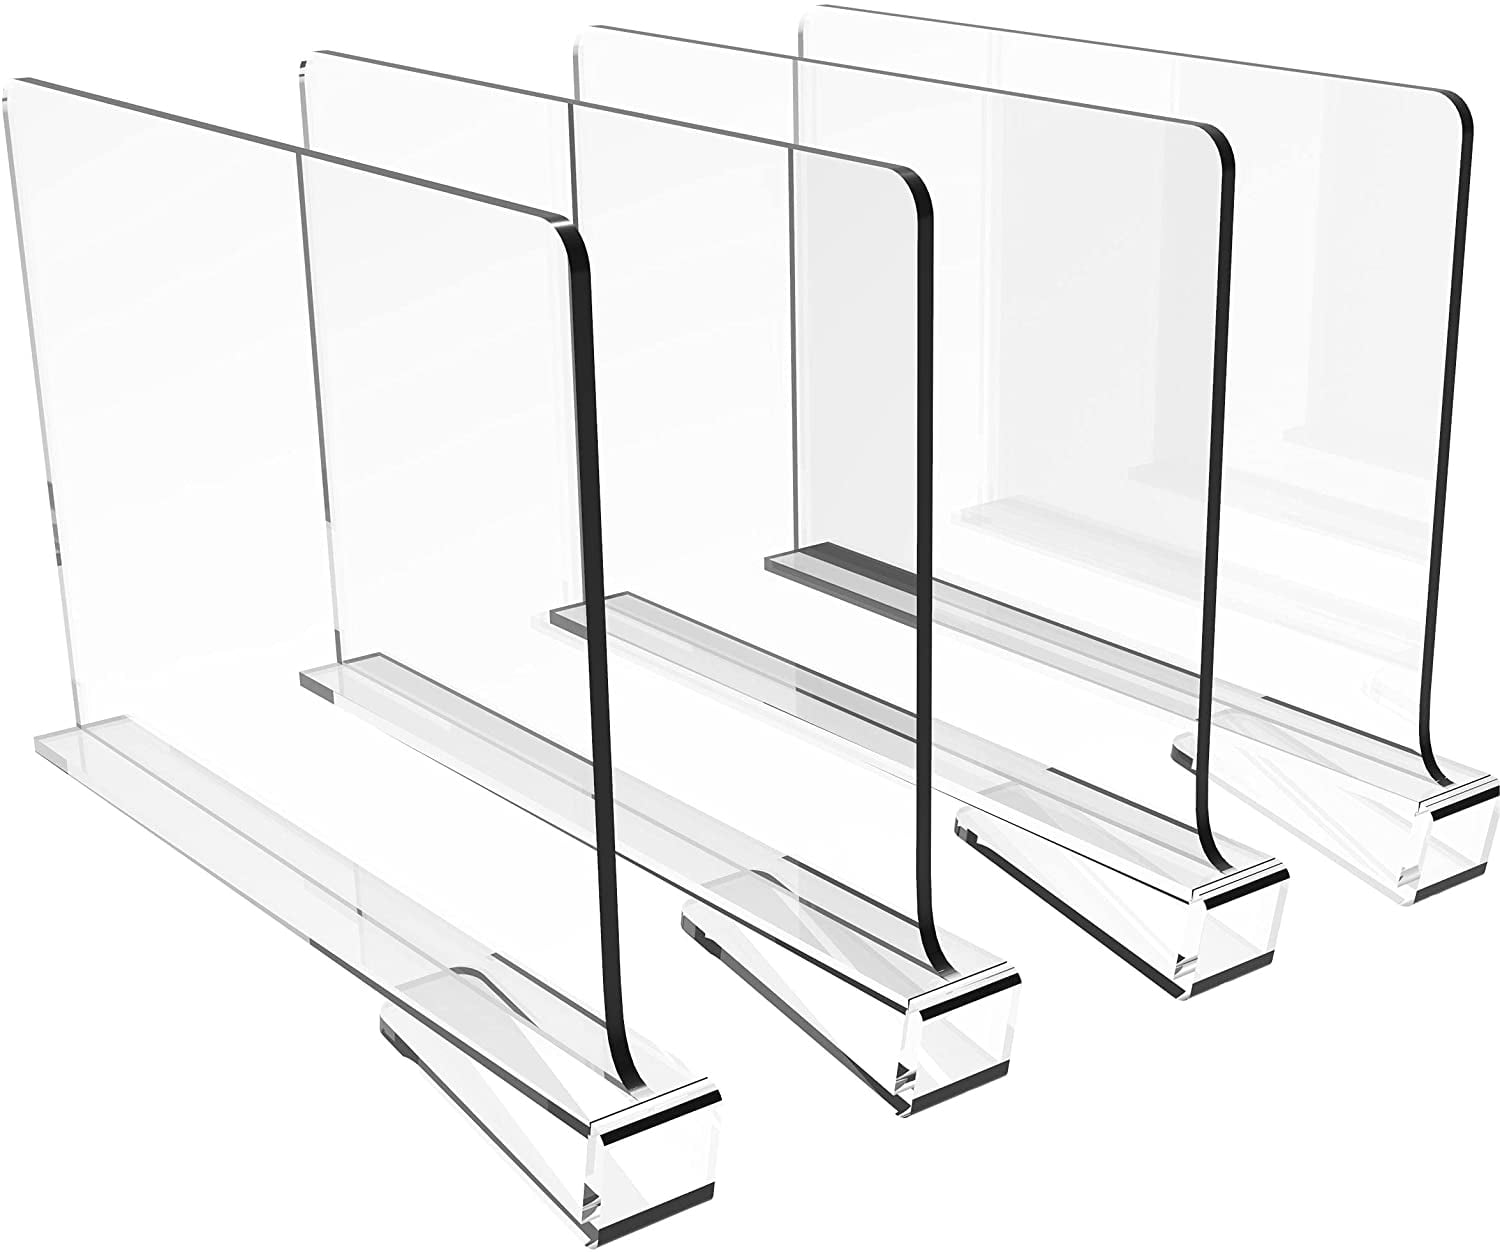 4x Acrylic Shelf Dividers for Closets Clear Shelf Separators Shelf Organization 